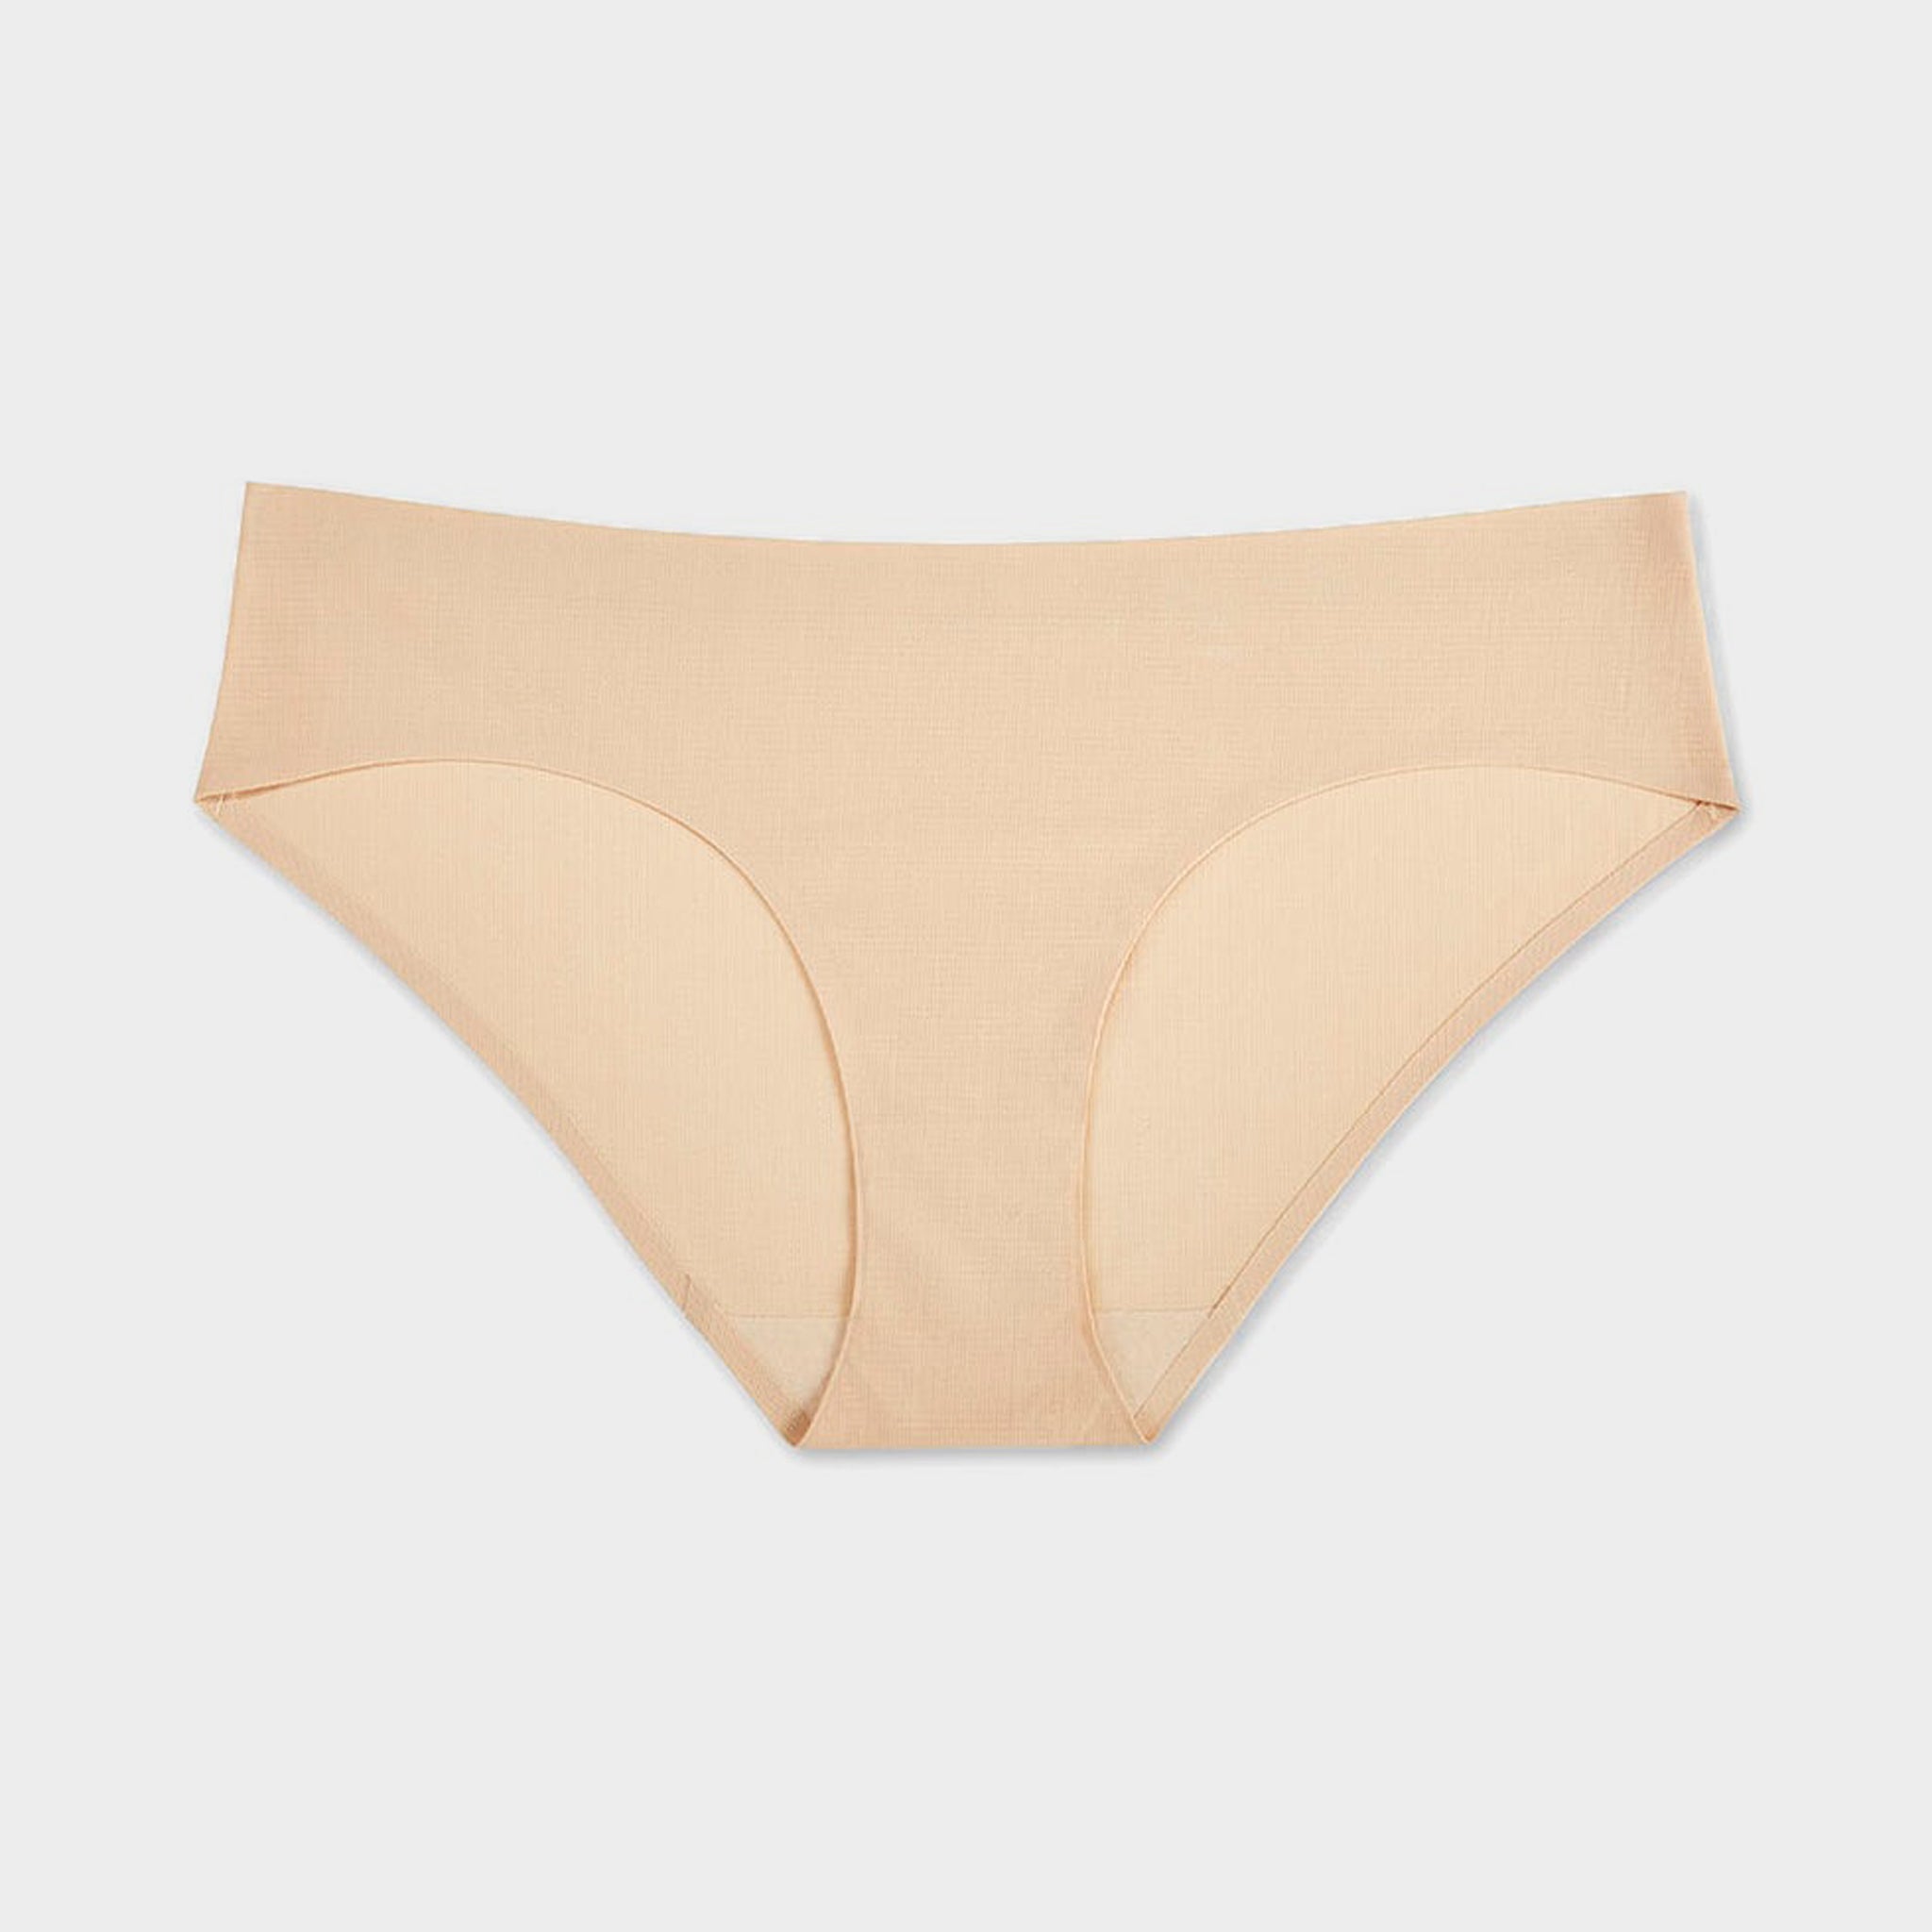 Buy Rocio Panty - Order Panties online 1121871100 - Victoria's